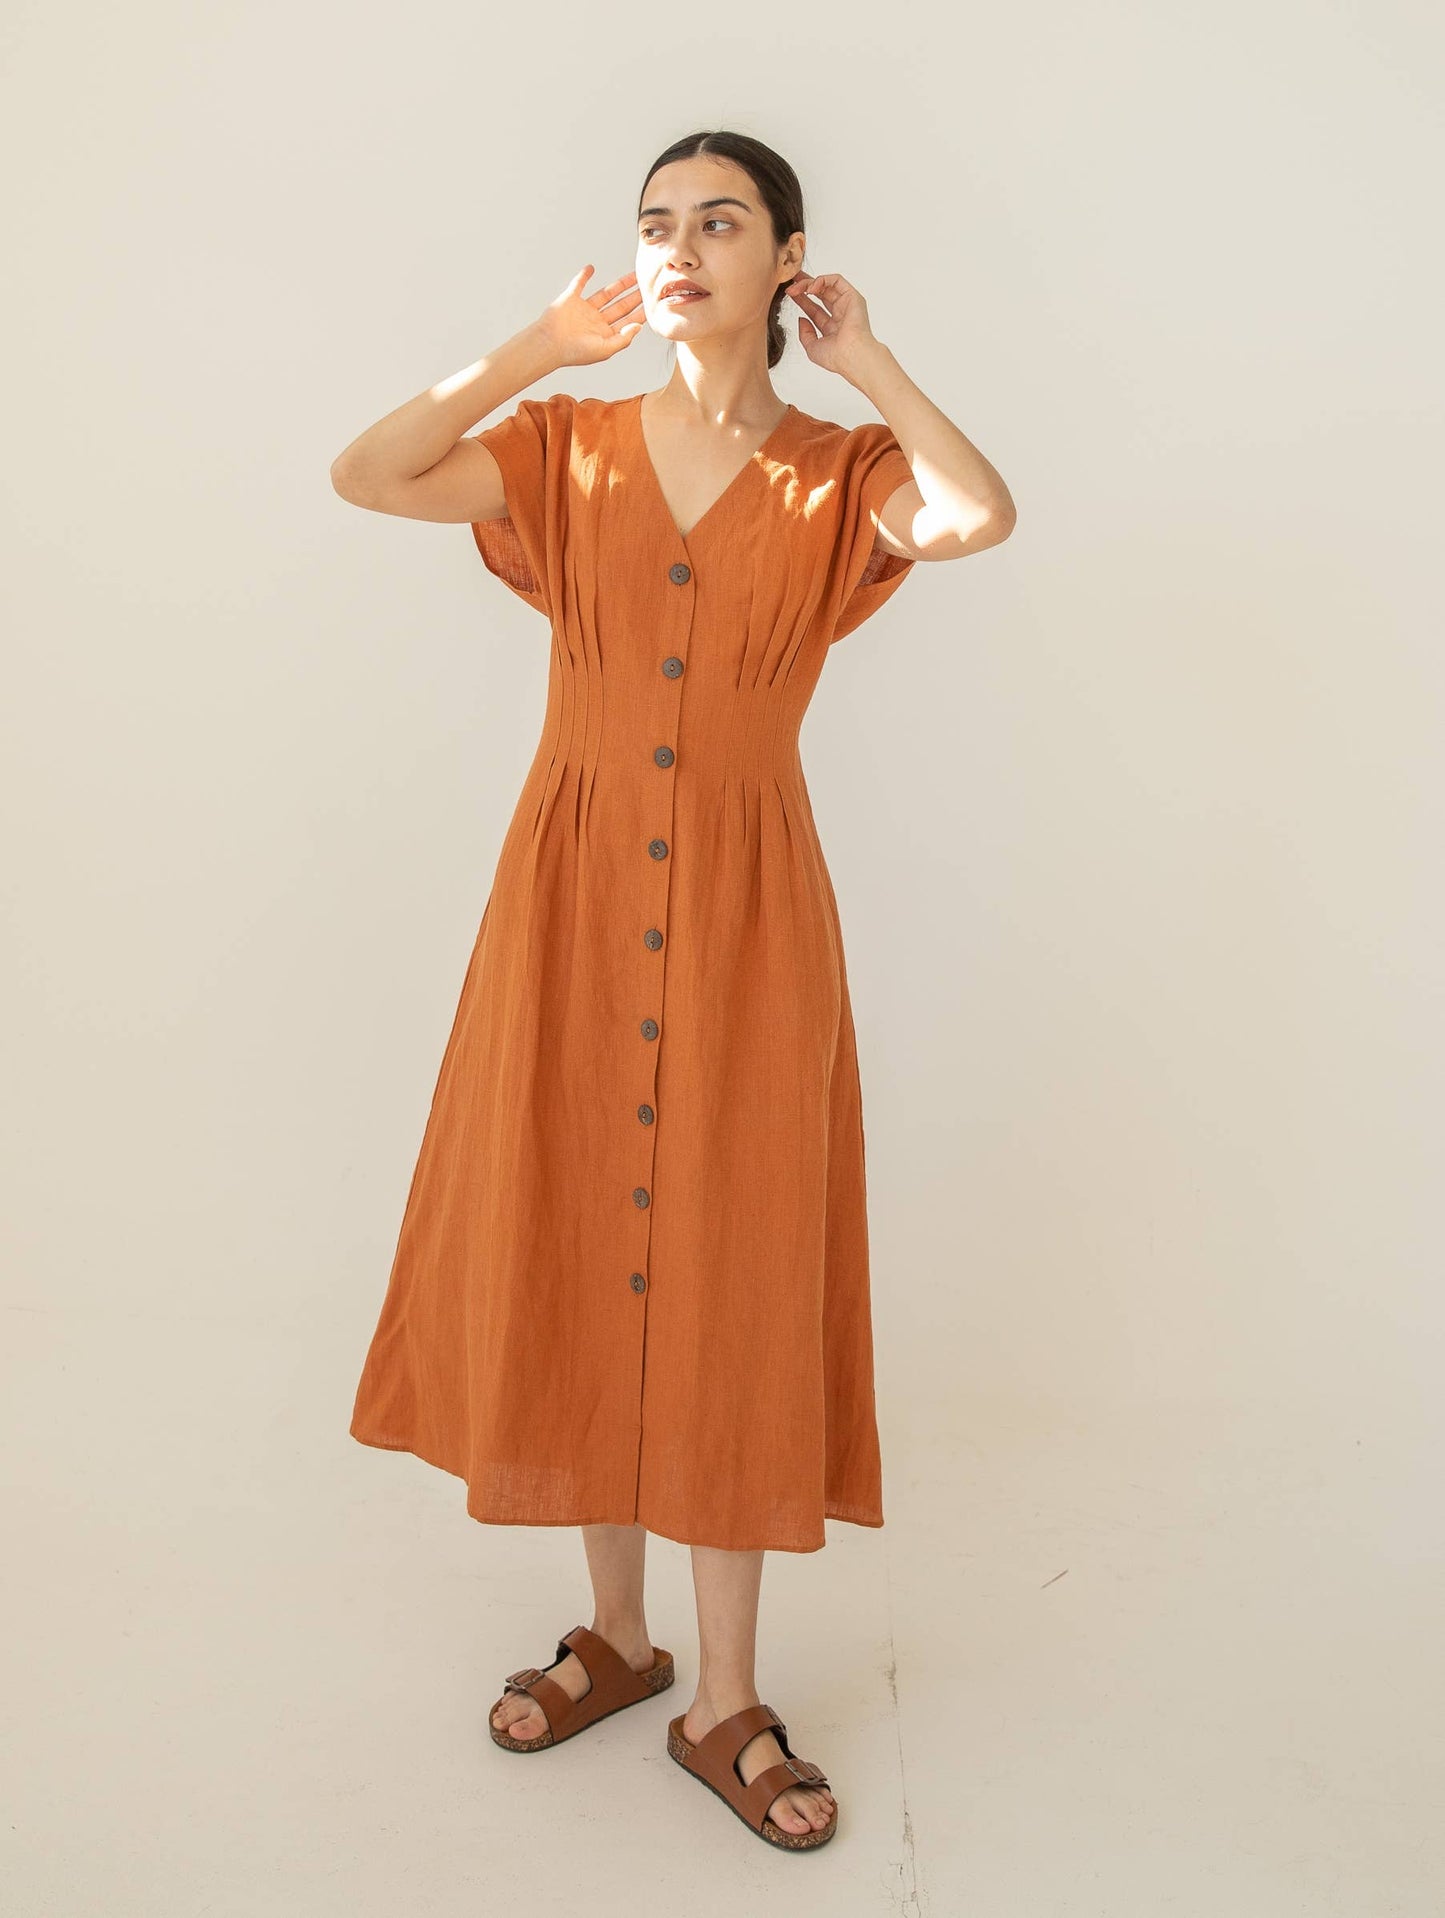 VIKOLINO - Linen Long Dress, Linen Charlotte Dress: Rust